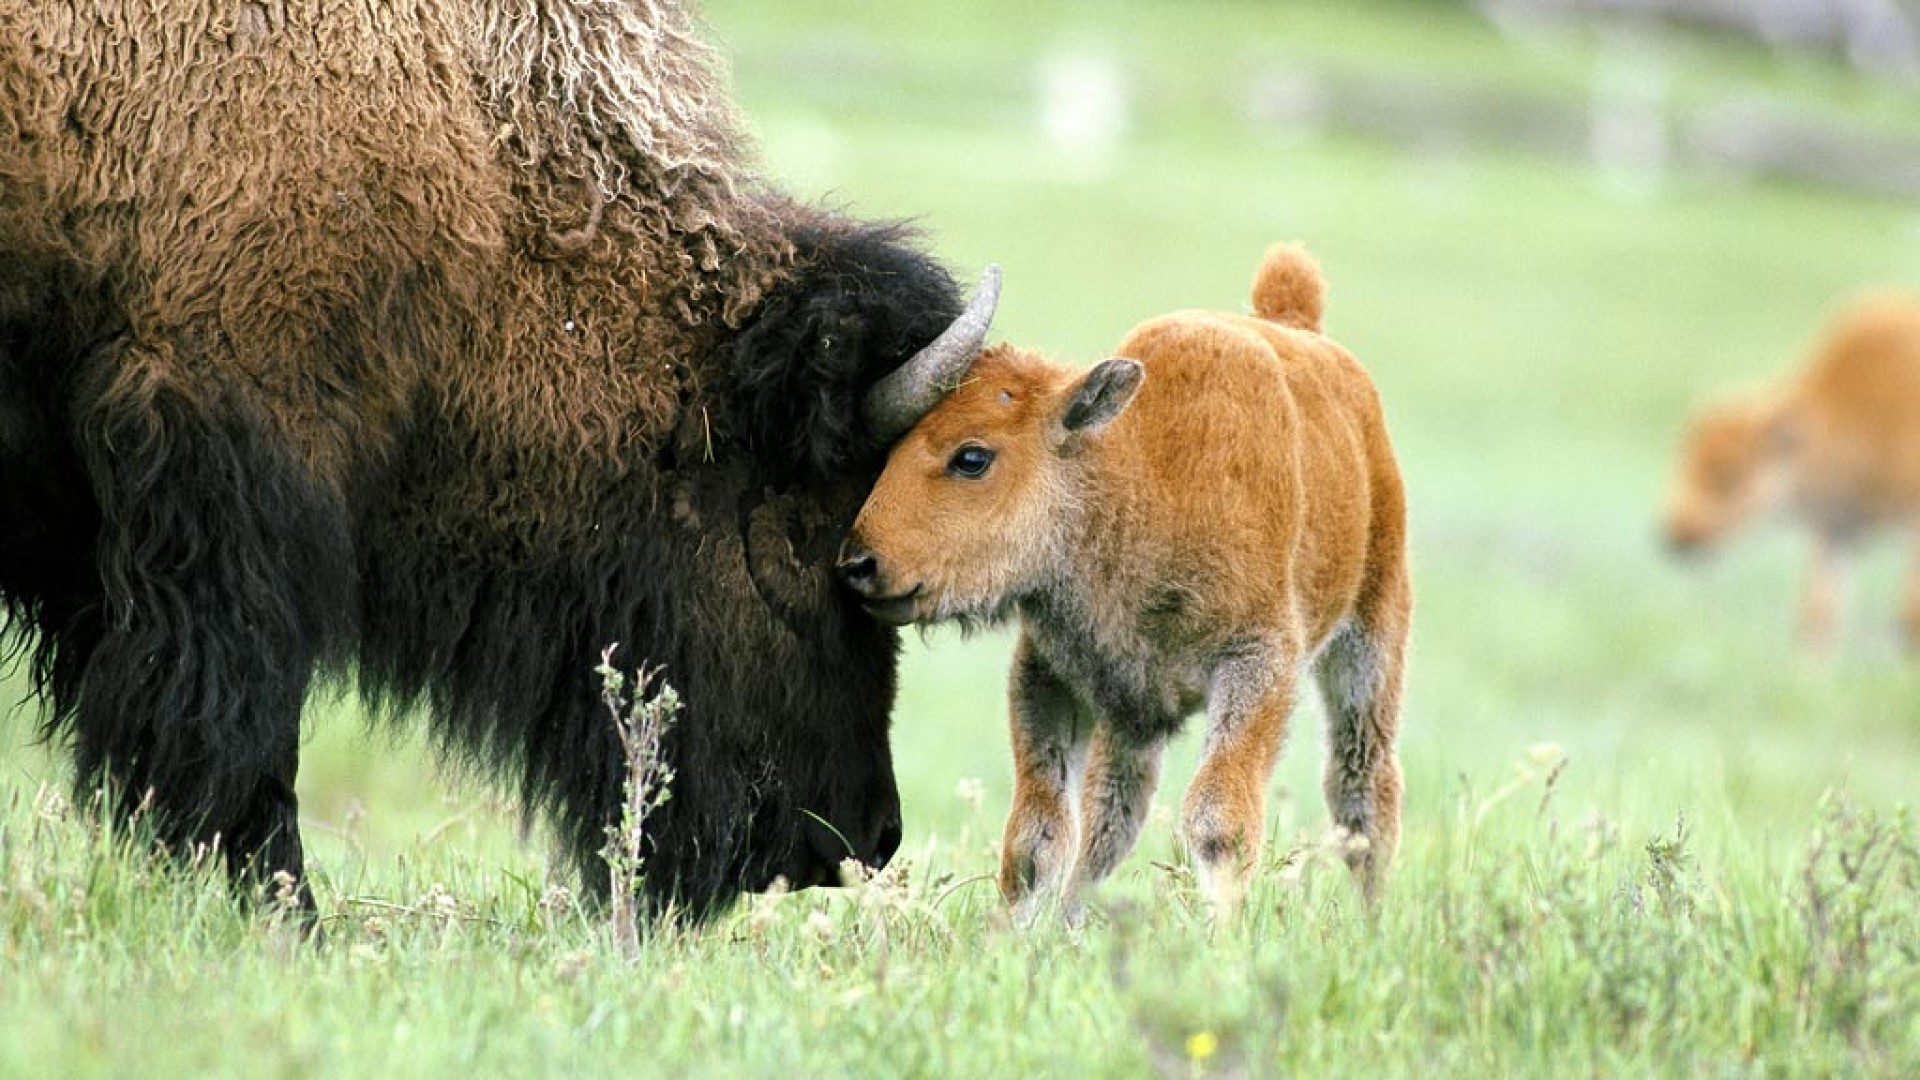 Bison care